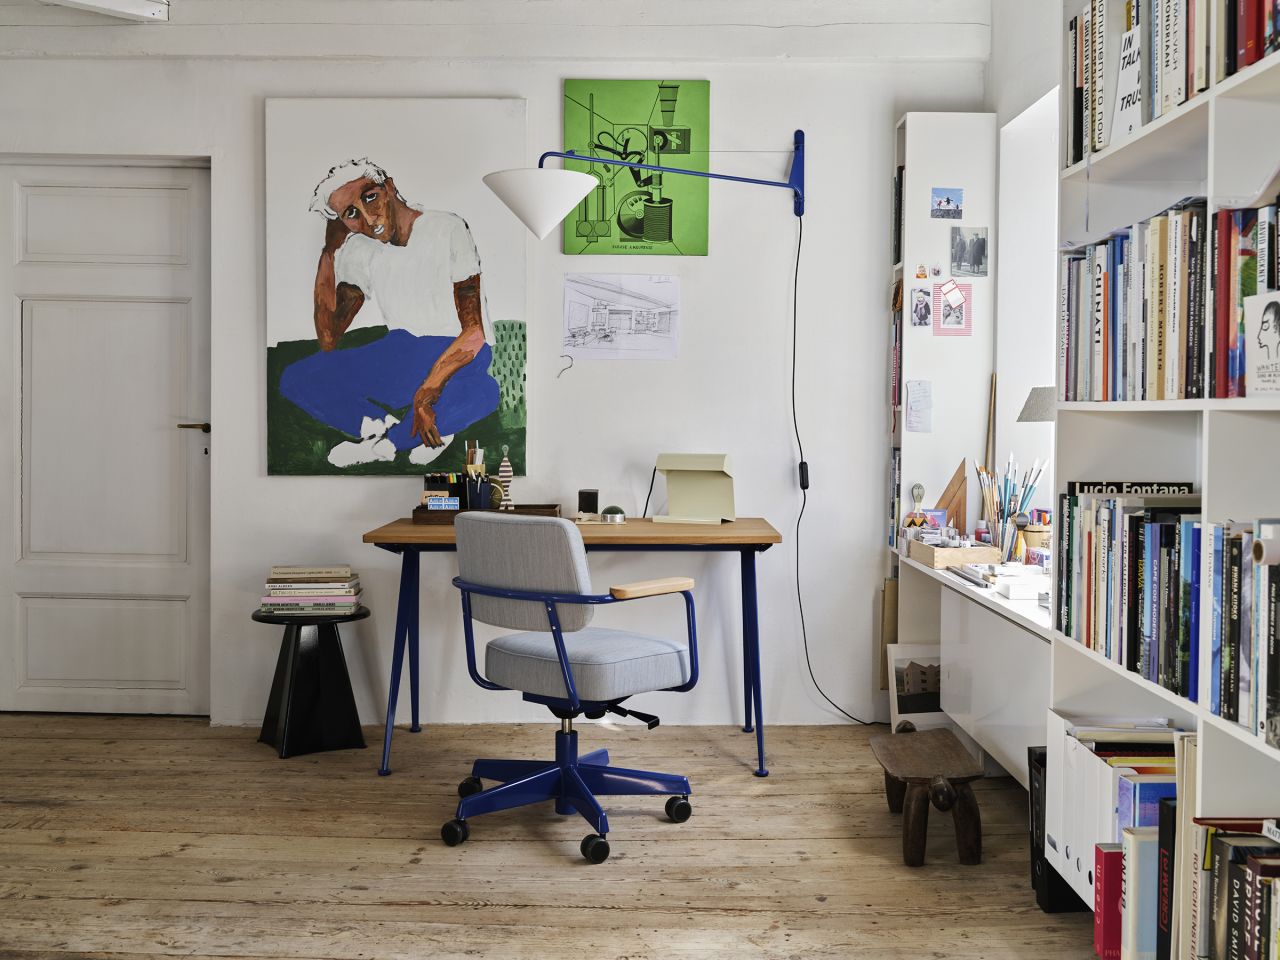 Creators Stand Up Desk, Home Office Desk, Work From Home Desks